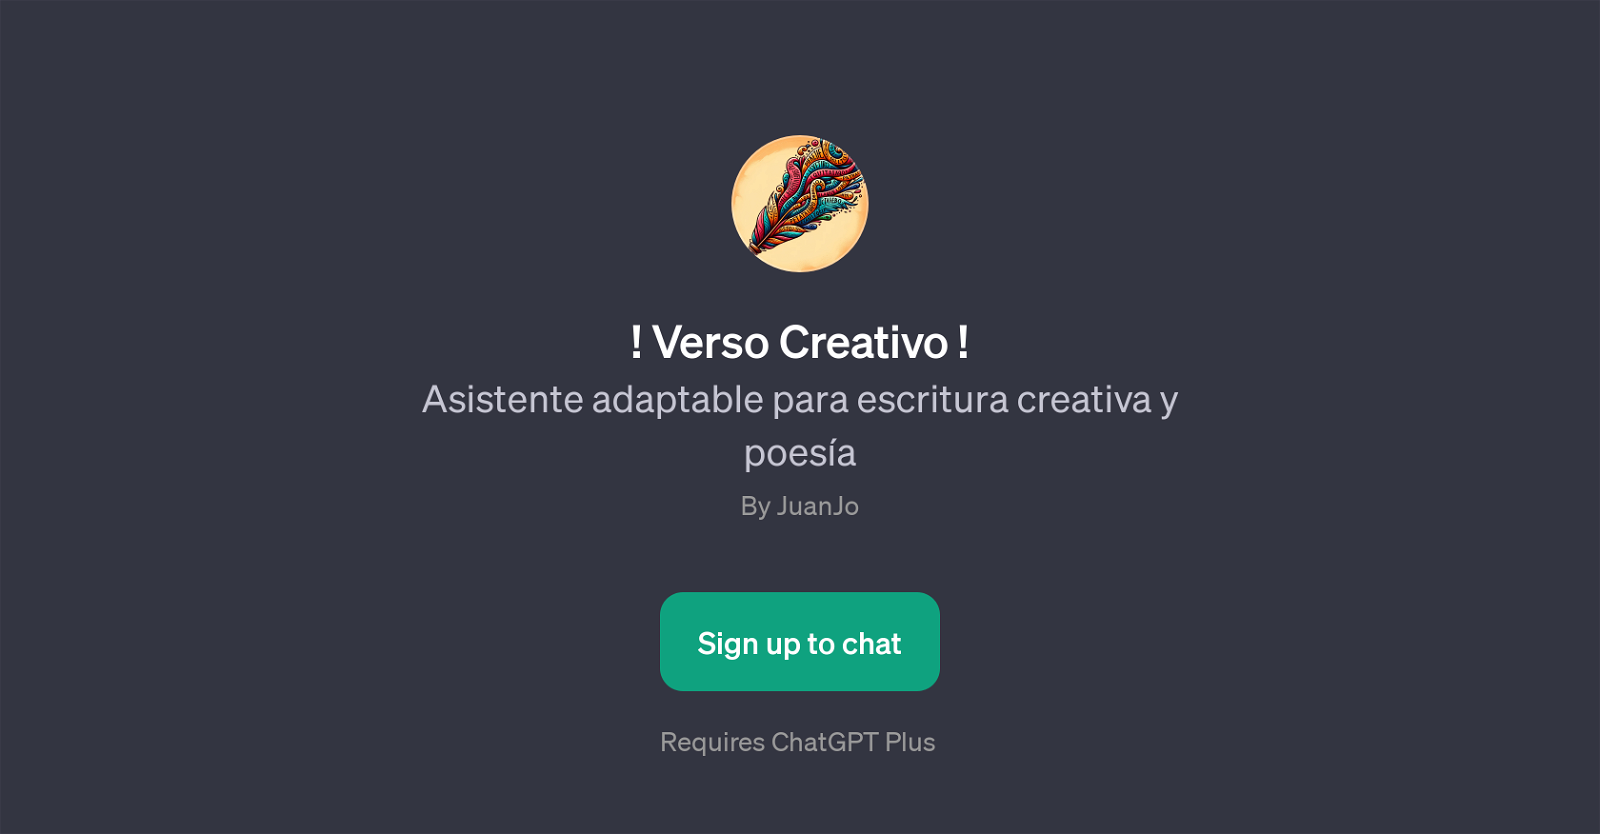 Verso Creativo website